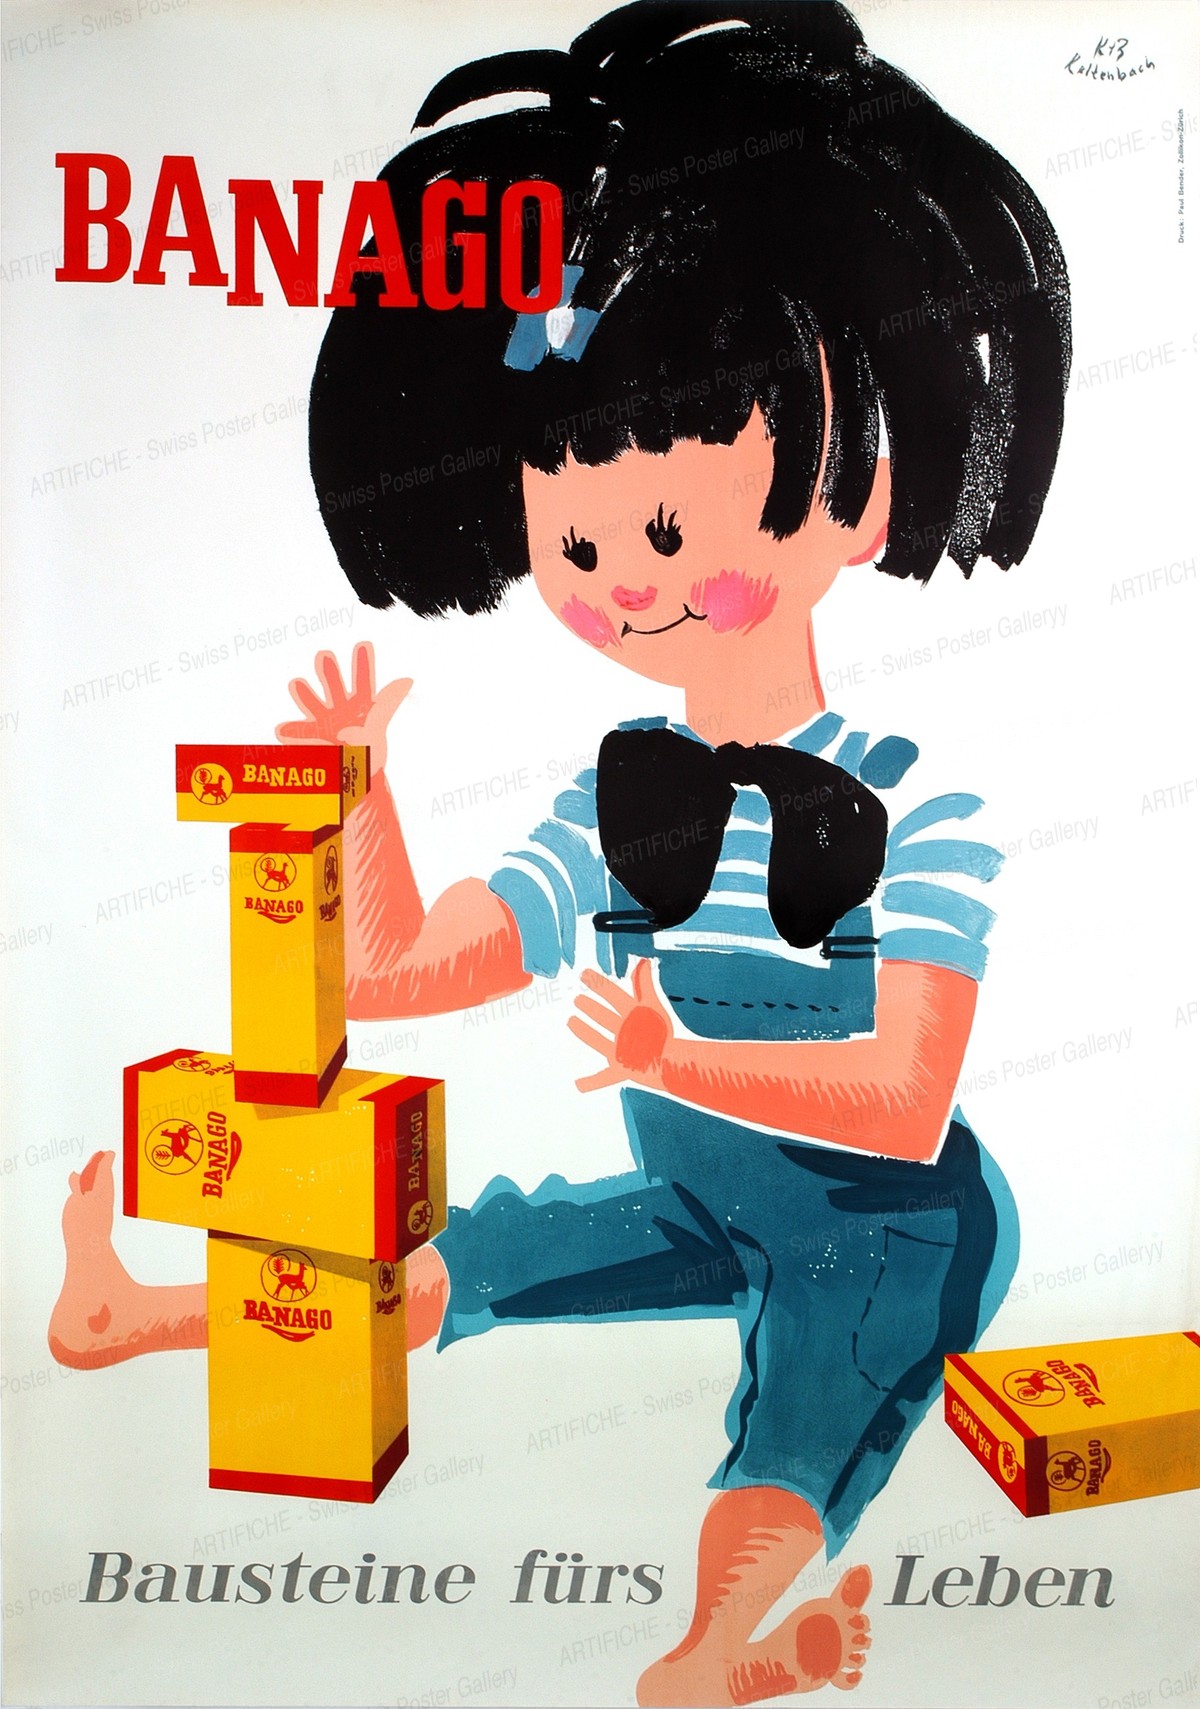 Banago Breakfast Drink for Children – Aliment fortifiant, Kaltenbach-Zbinden